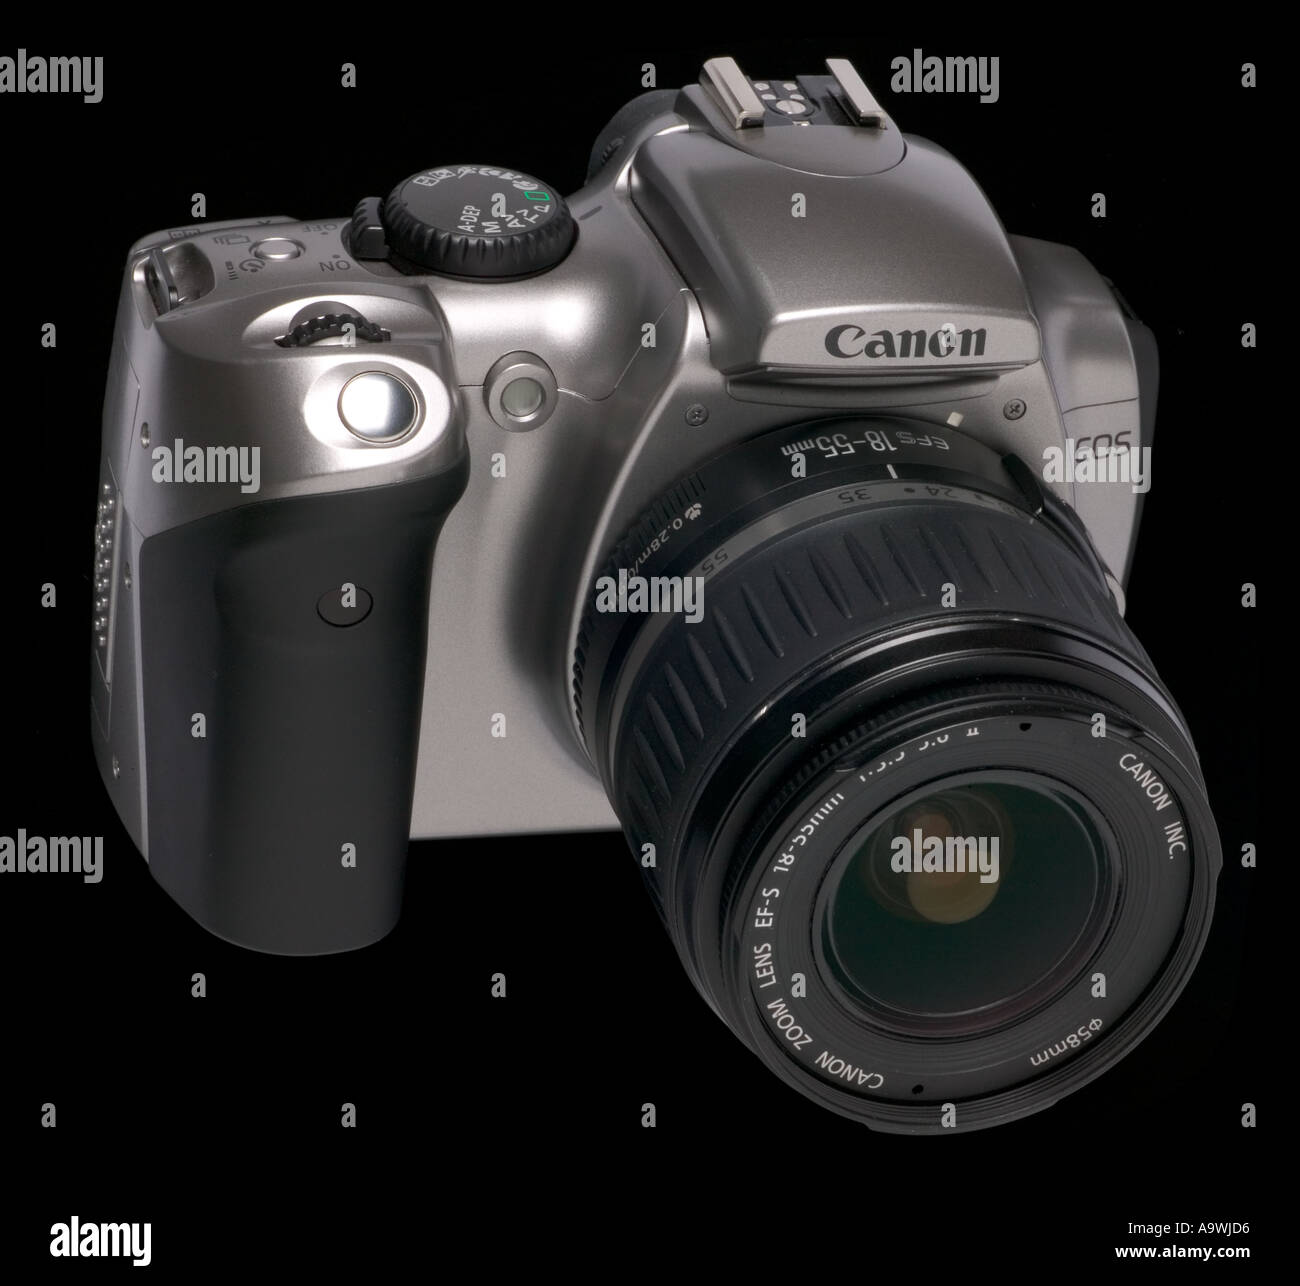 Canon 300d digital SLR camera 6mp six megapixel Stock Photo